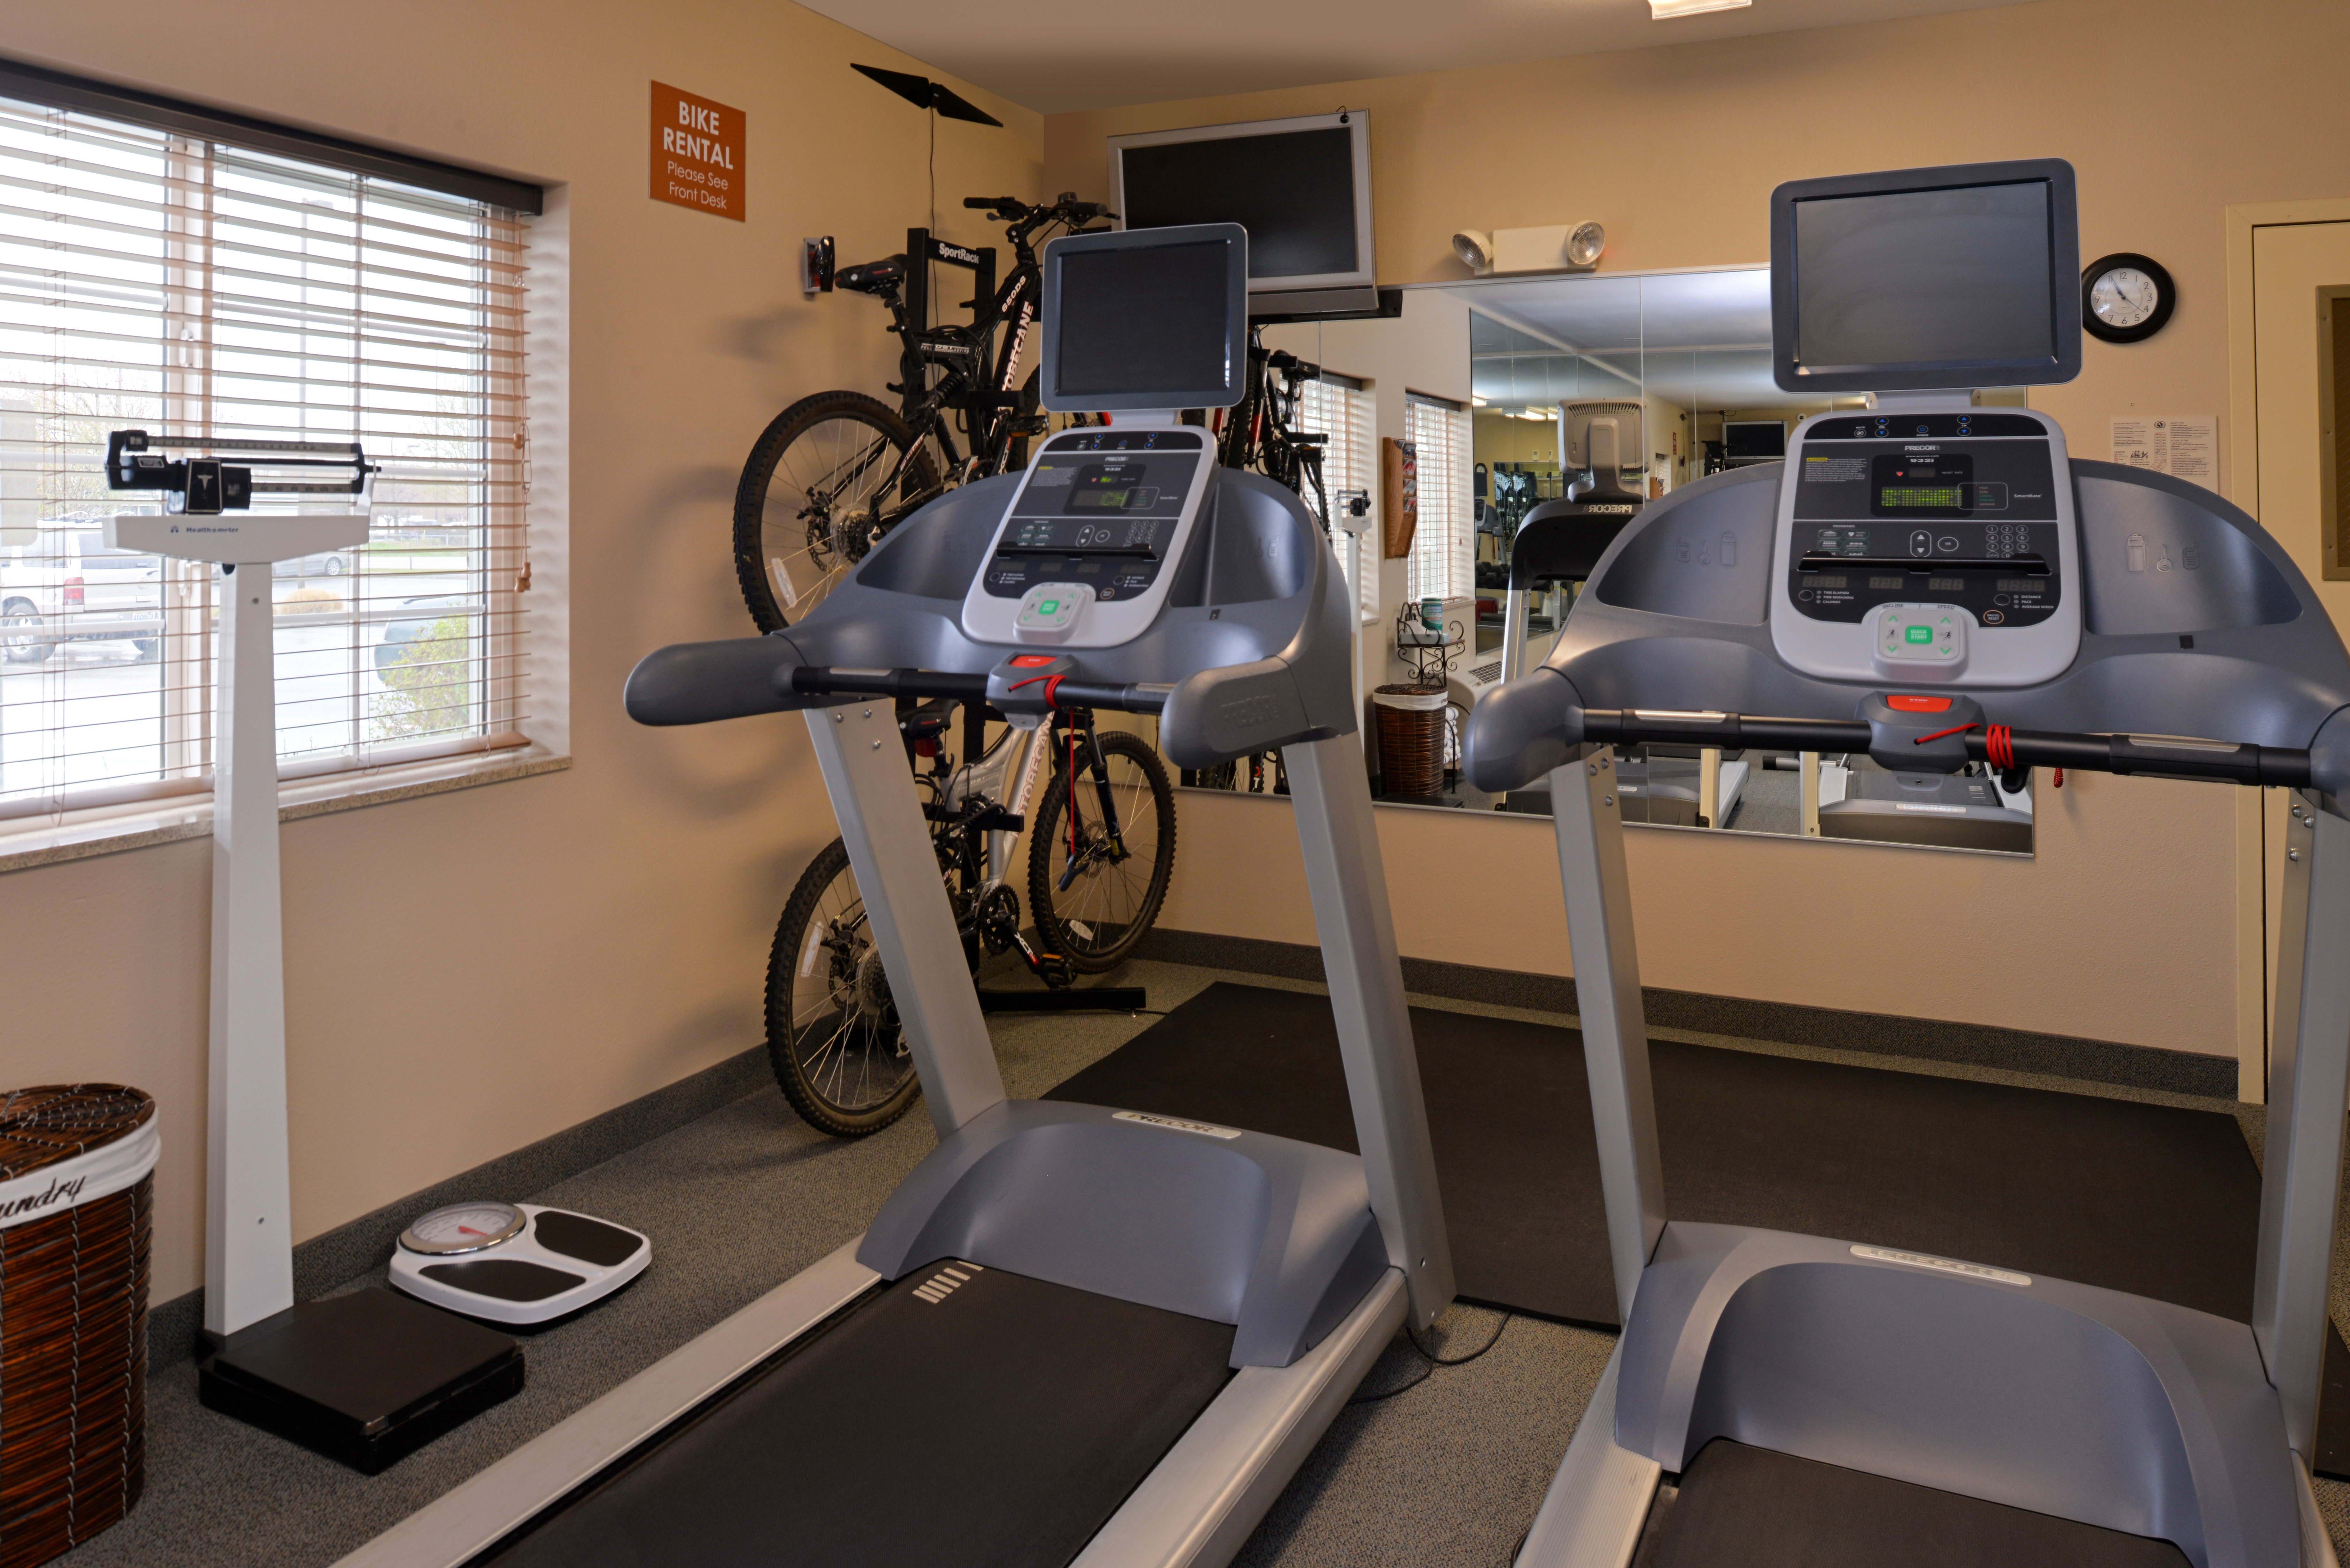 Stay active indoor or outdoor with bike rentals and treadmills. 